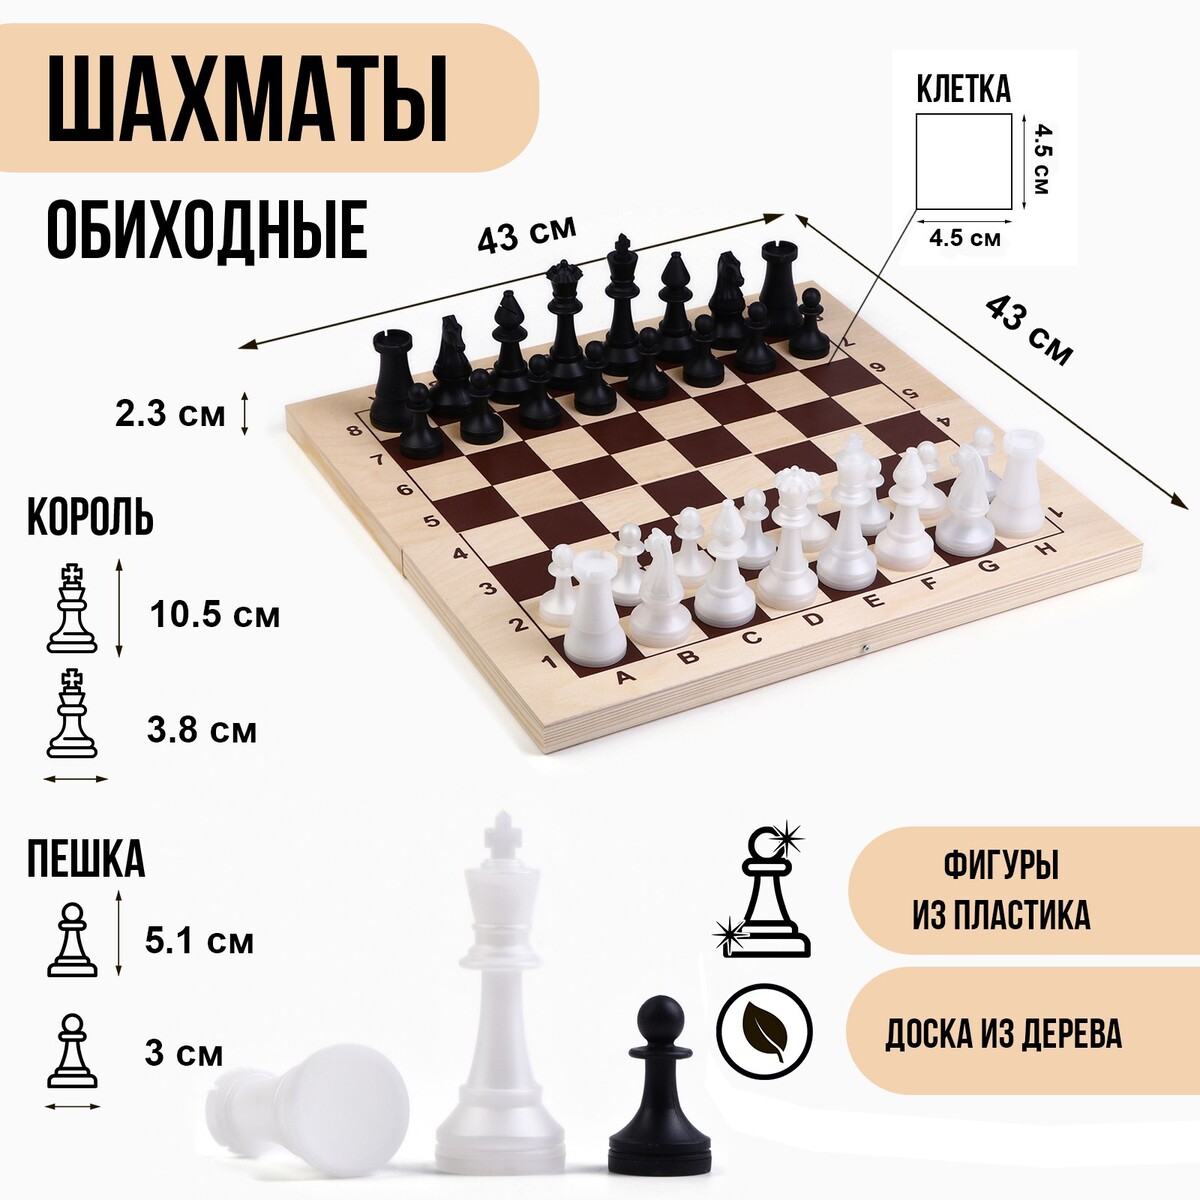 Шахматы гроссмейстерские, турнирные 43 х 43 см, фигуры пластик, король 10.5 см, пешка 5 см шахматы турнирные деревянные 40 х 40 см